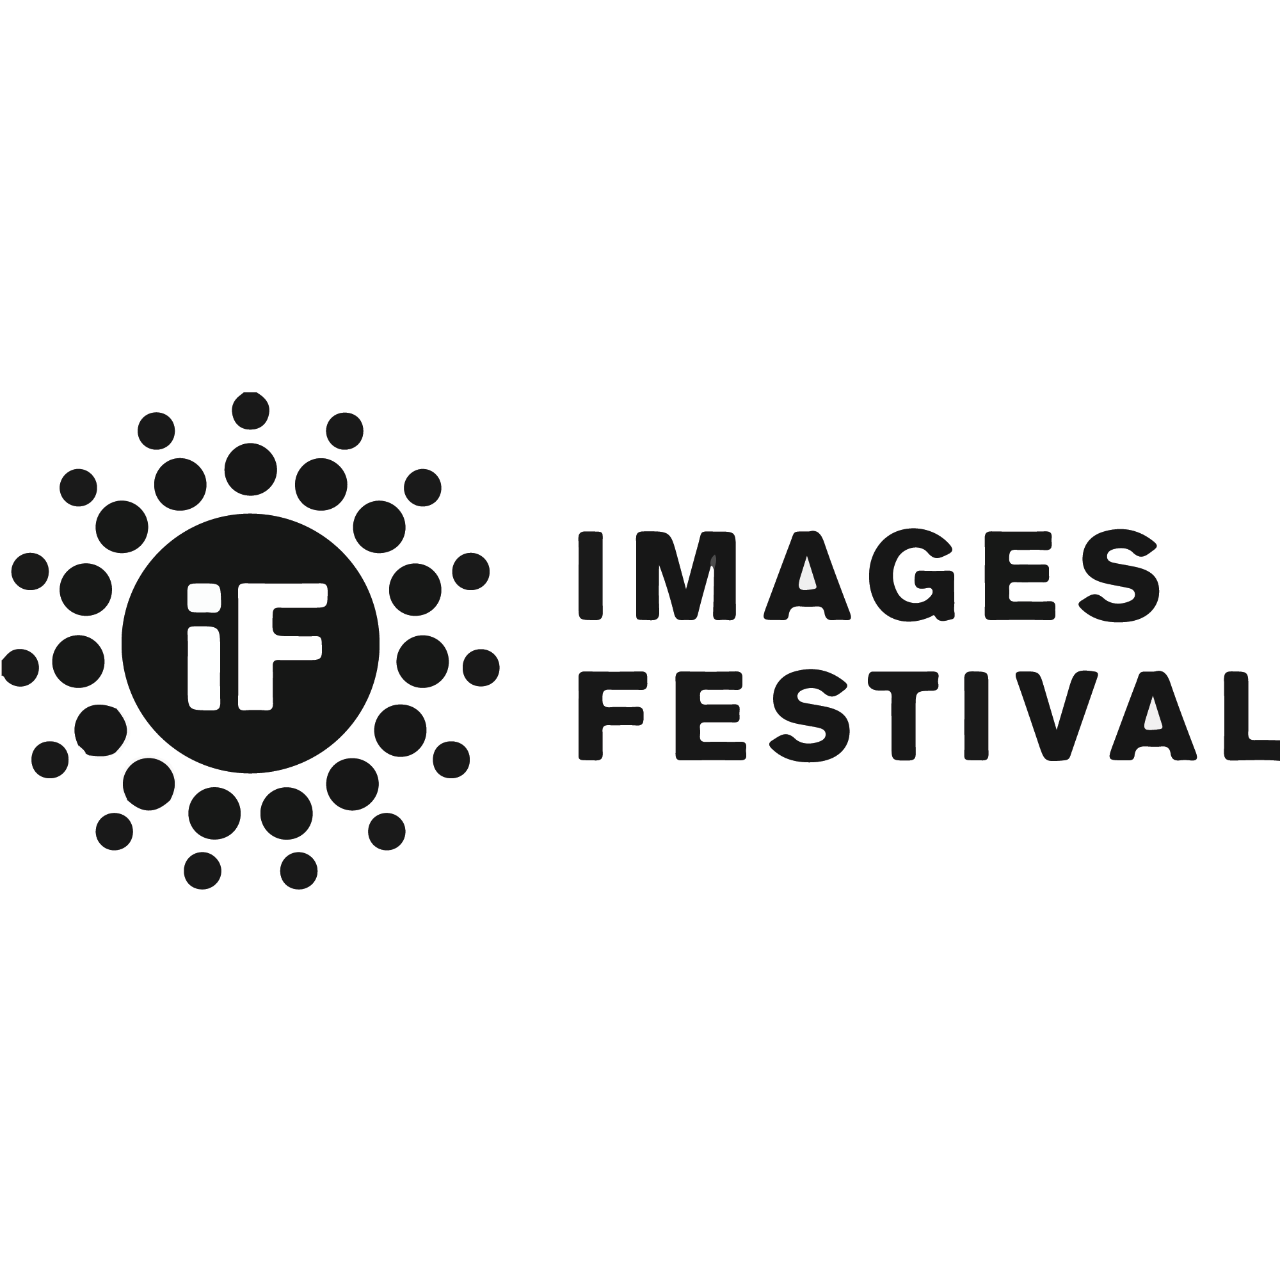 Images Festival